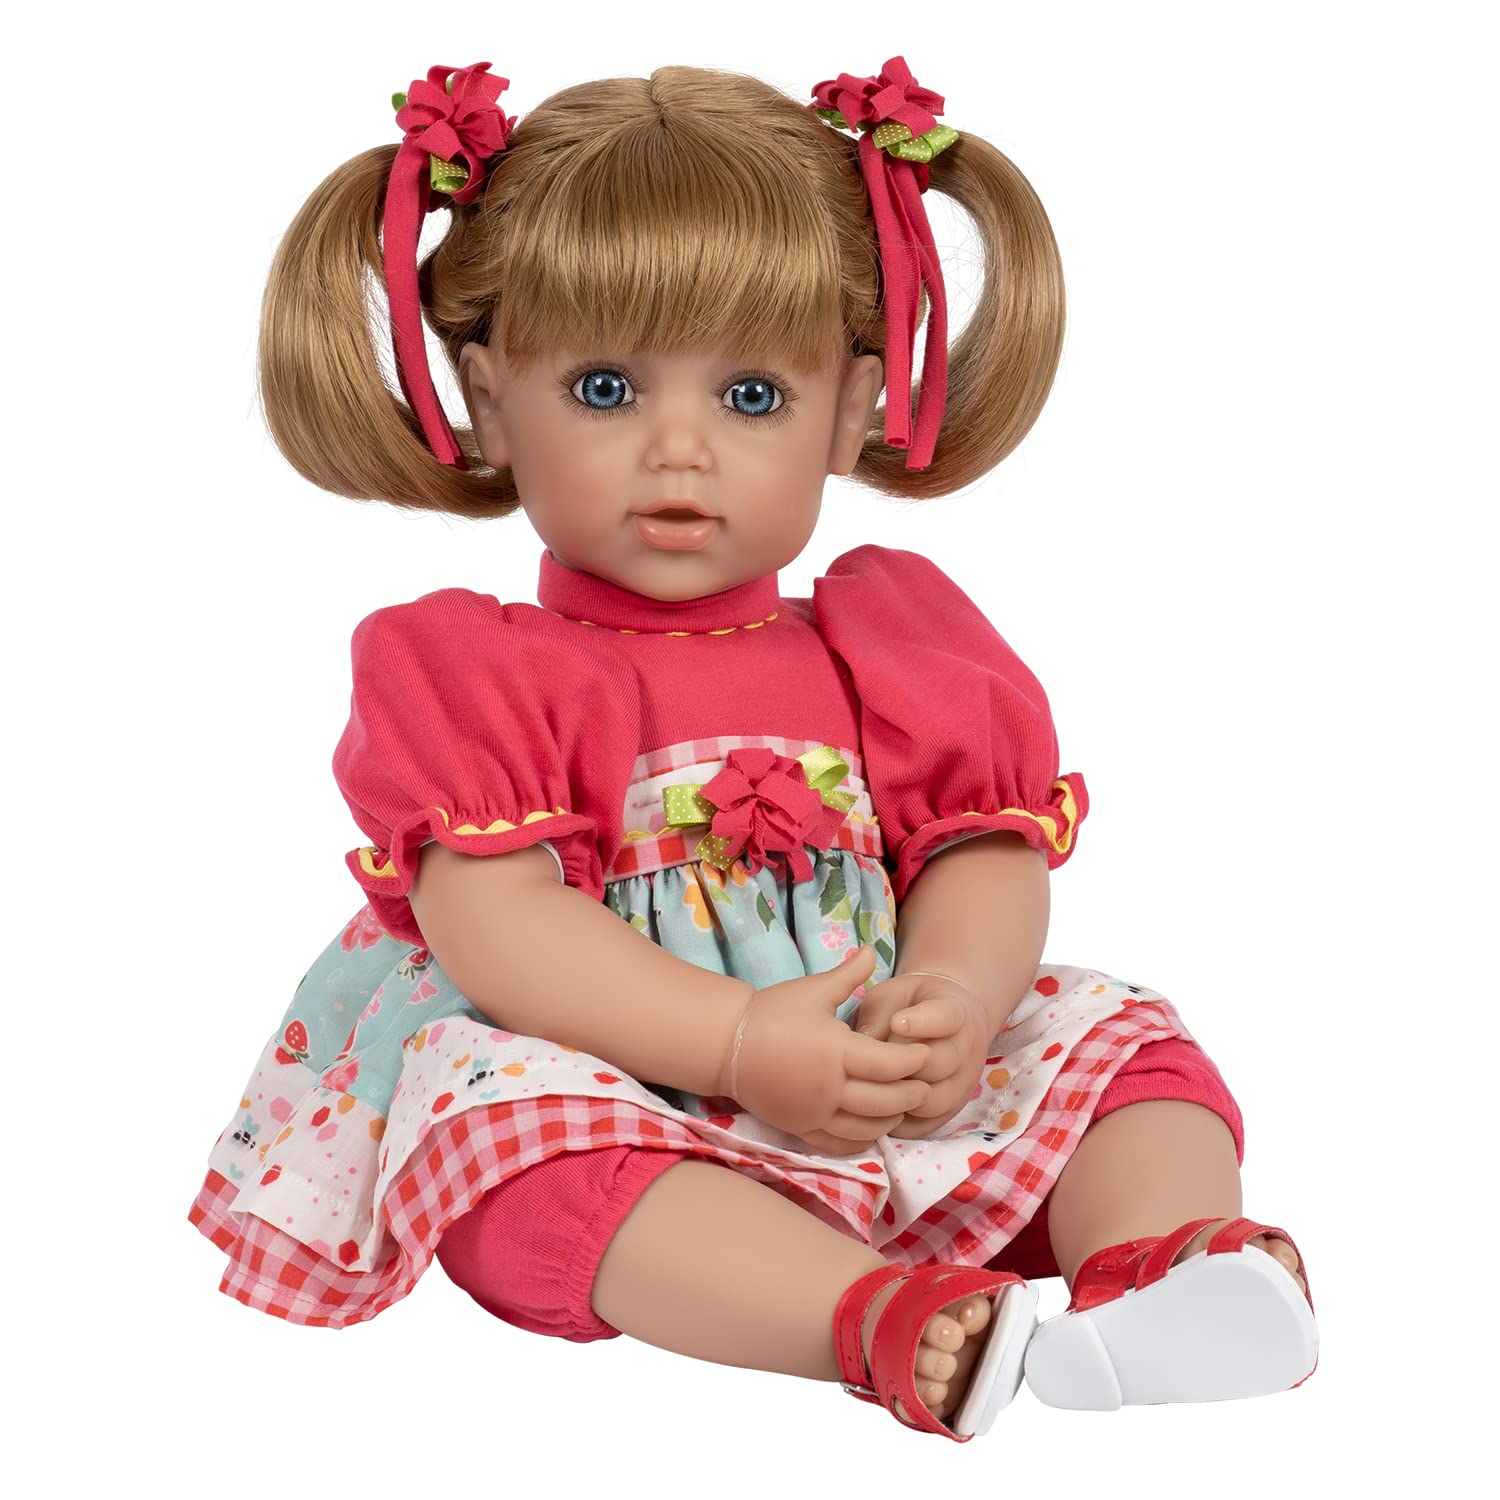 Adora Realistic Baby Doll Lace - Toddler Doll Polka Dot Picnic, 20 inch, Soft CuddleMe Vinyl, Black Hair/Brown Eyes